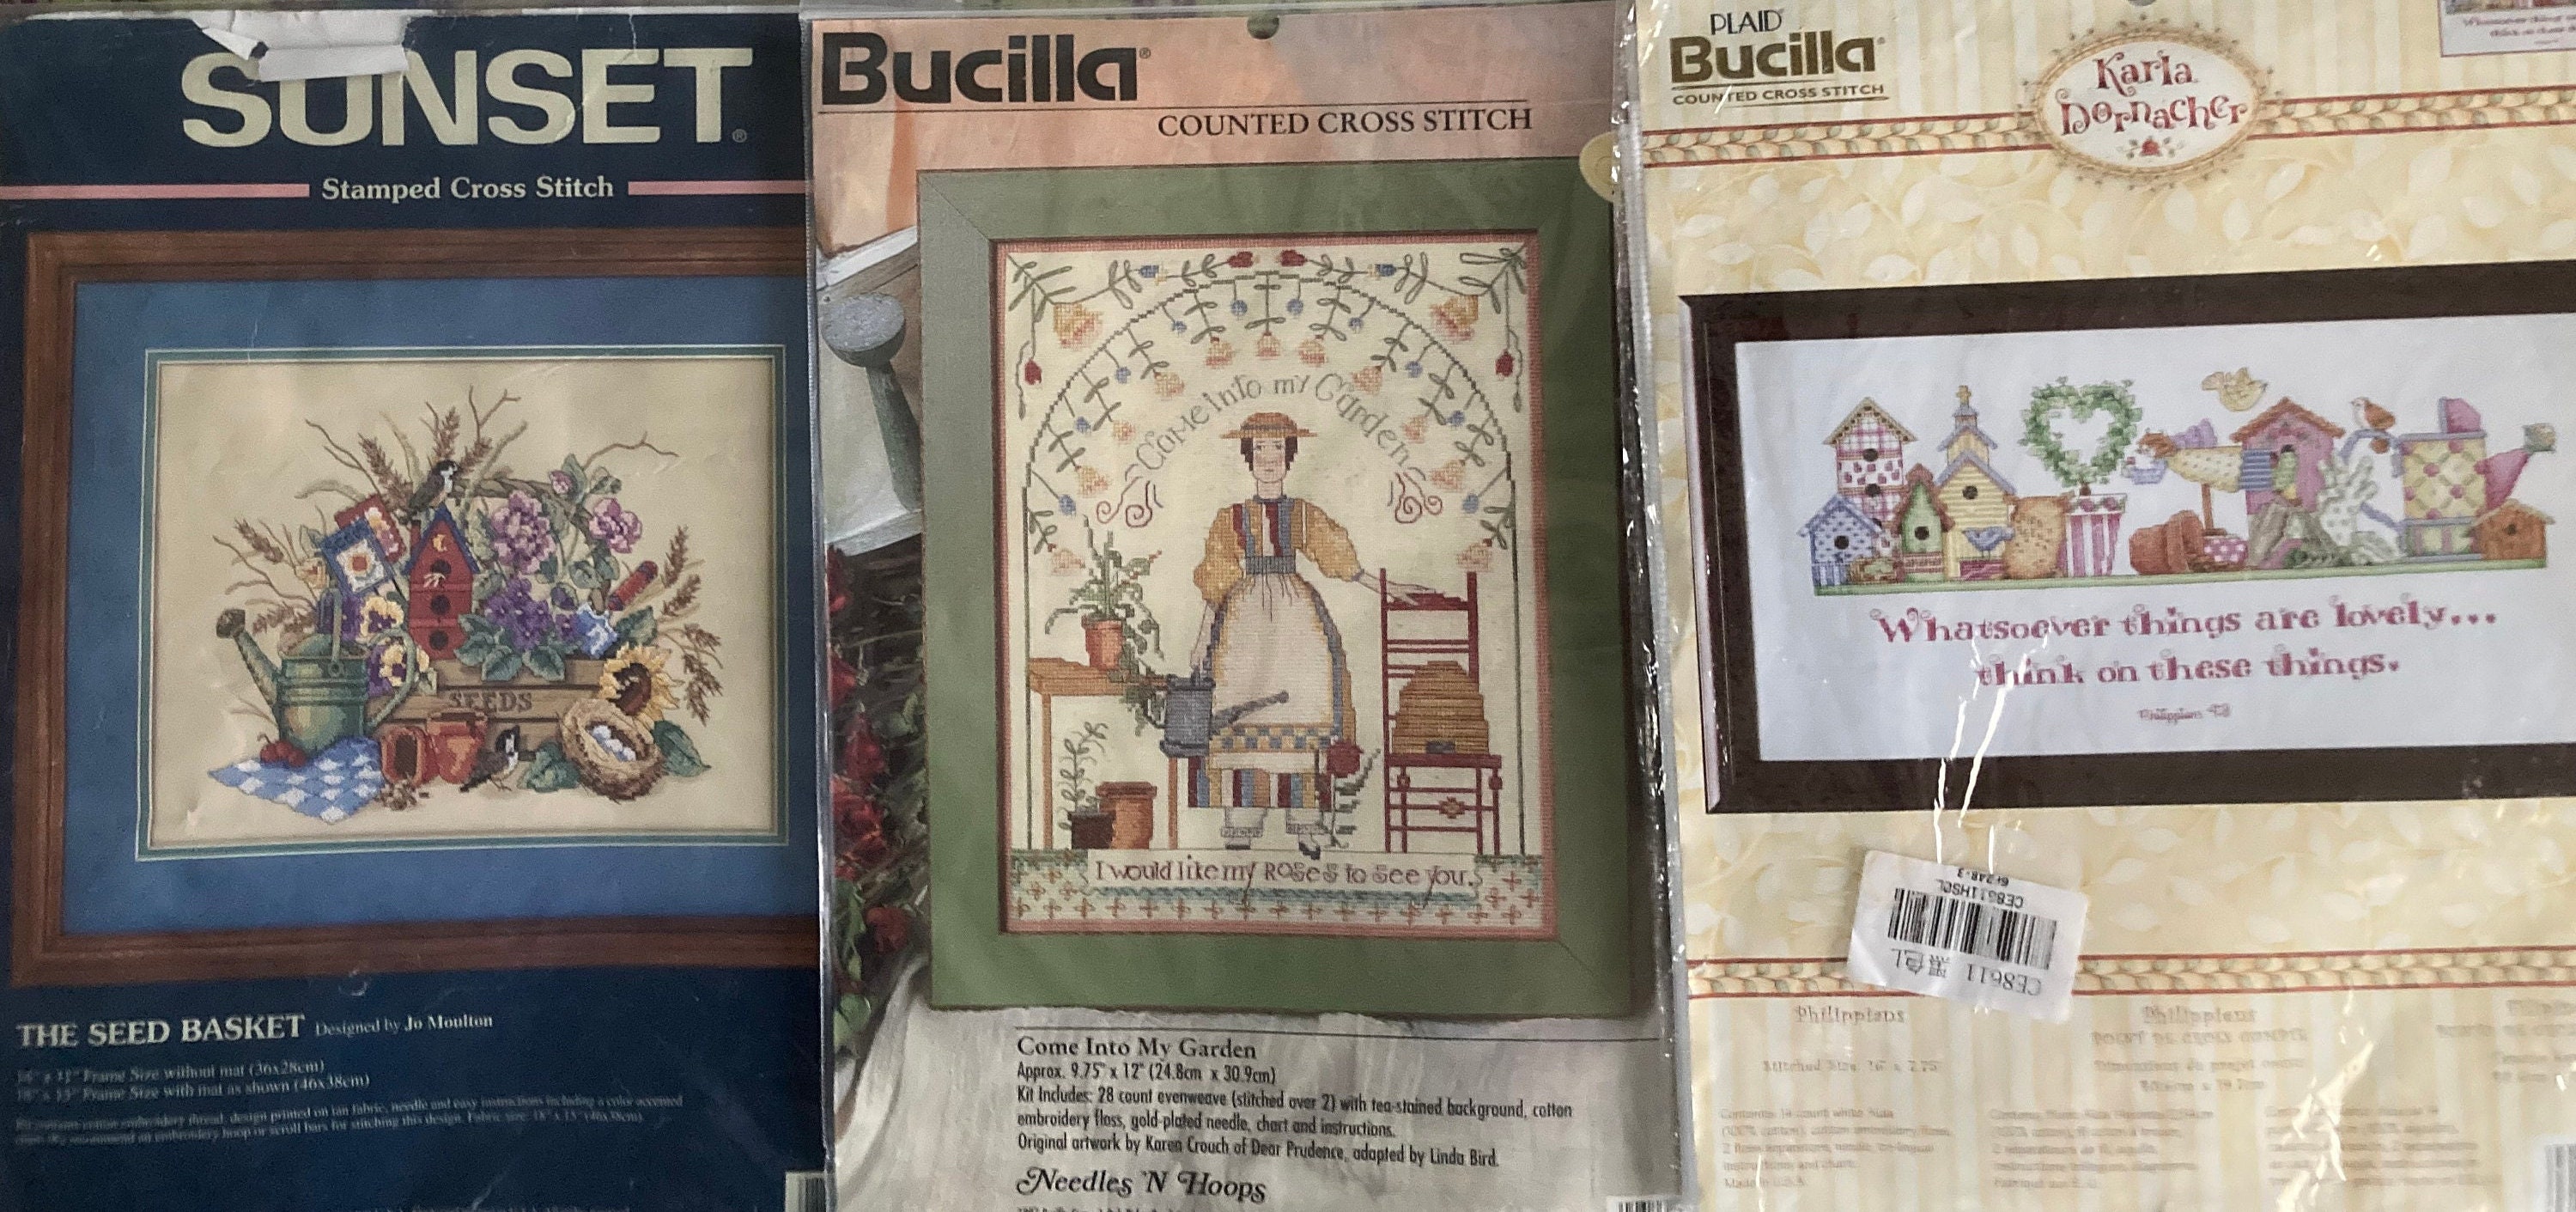 Bucilla 'Princess' Crib Cover Stamped Cross Stitch Kit - Bed Bath